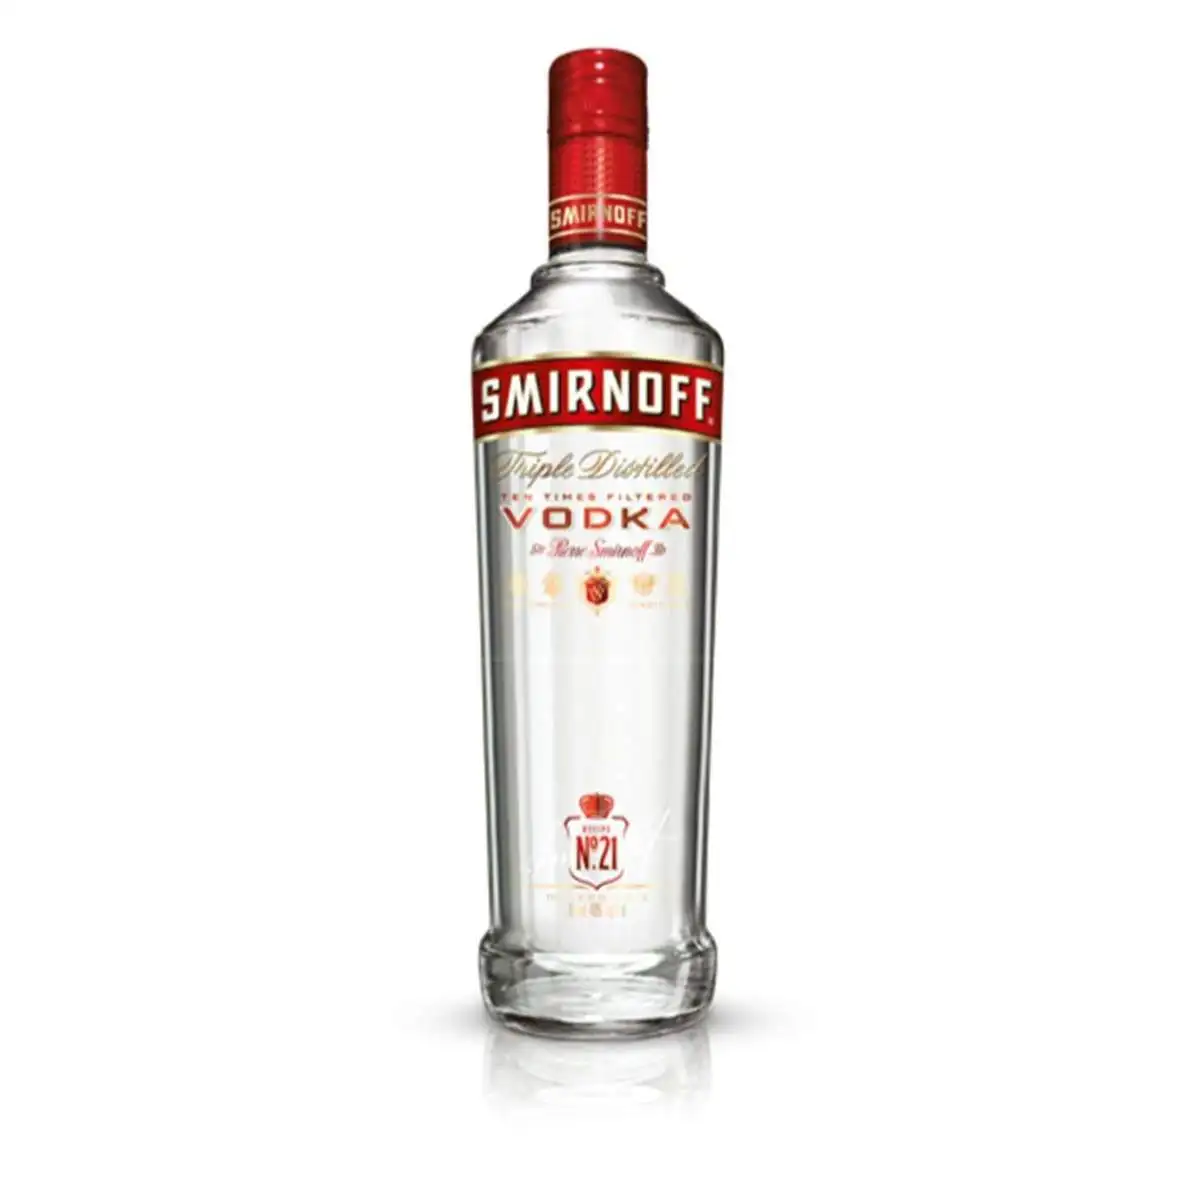 Smirnoff Spicy Tamarind 70 Proof Vodka Infused With Natural Flavors 750 Ml Bottle Buy Smirnoff Vodka Liter Buy Online At Best Price Wholesale Of Smirnoff Vodka Europe Supplier Product On Alibaba Com